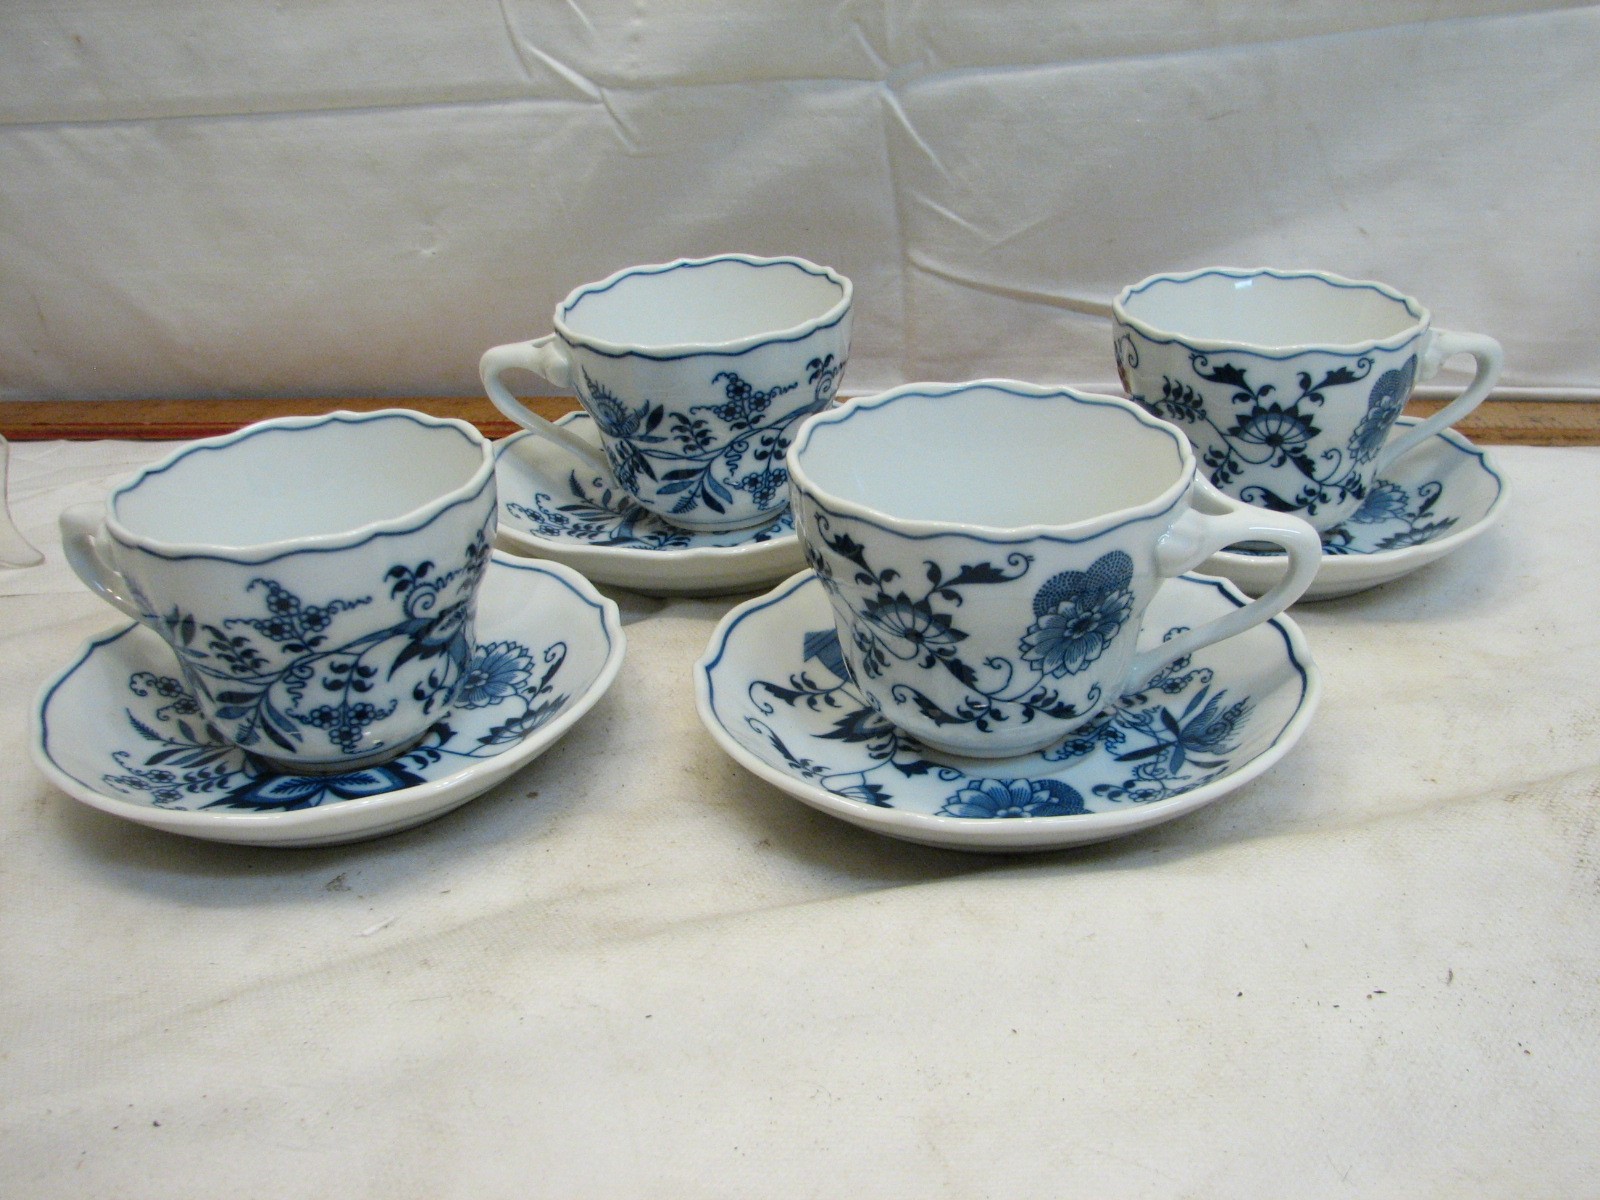 Blue Danube Blue Onion Pattern Cobalt Blue and White Vintage Tea Cup Blue Danube Tea Cup and Saucer